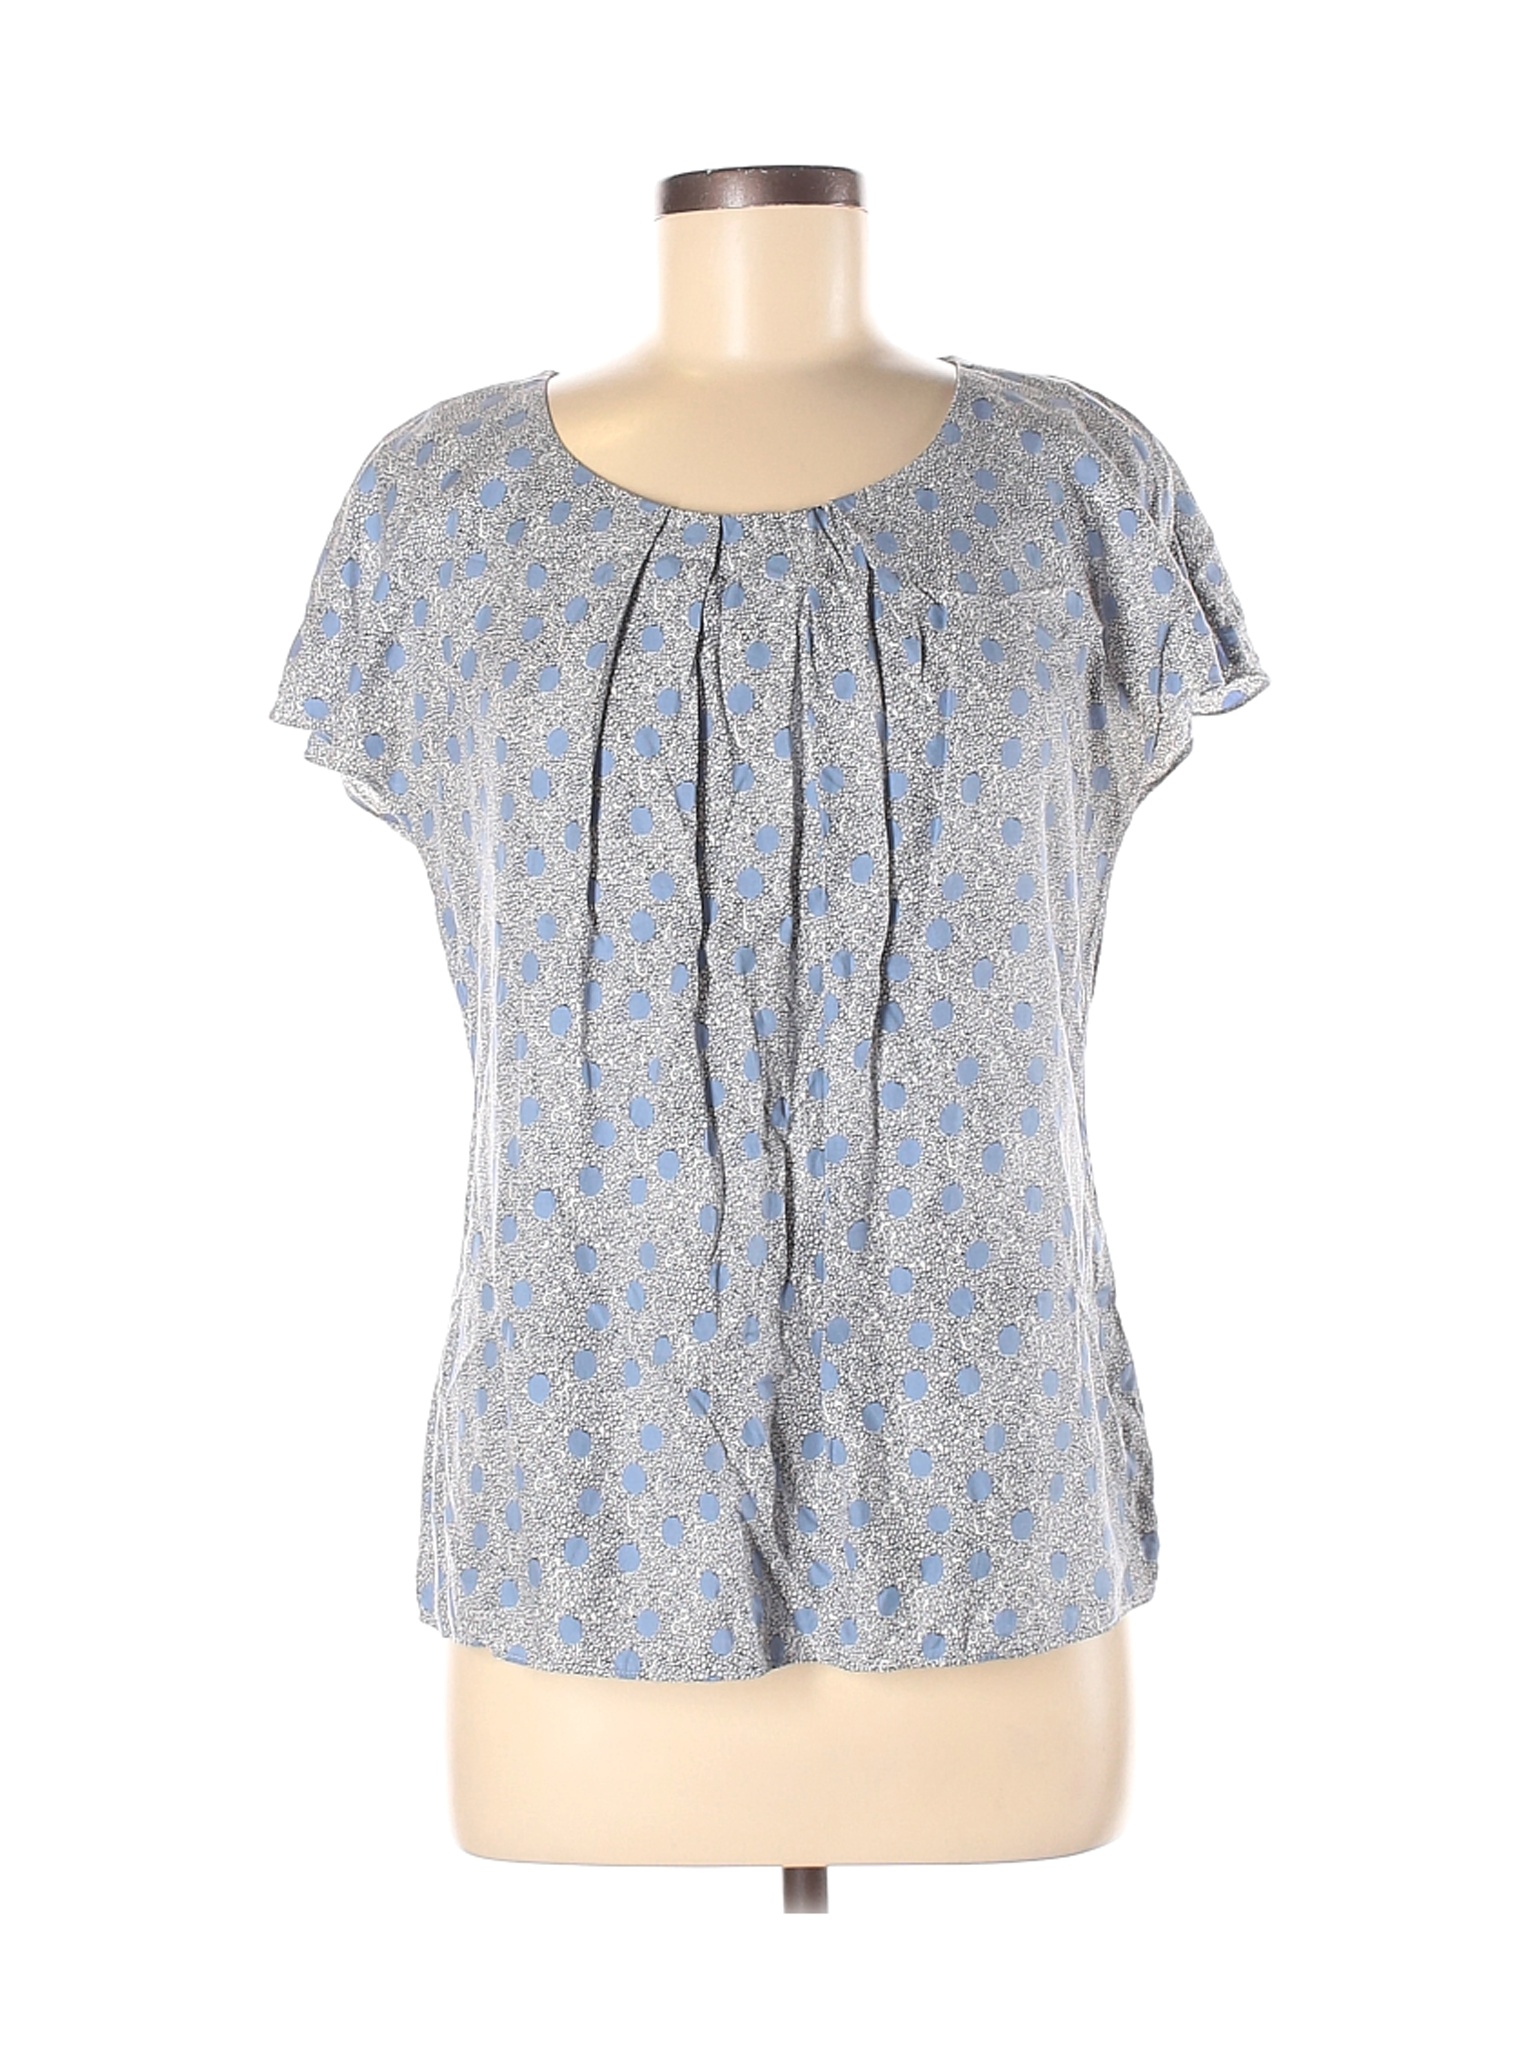 Boden Women Blue Short Sleeve Blouse 8 | eBay